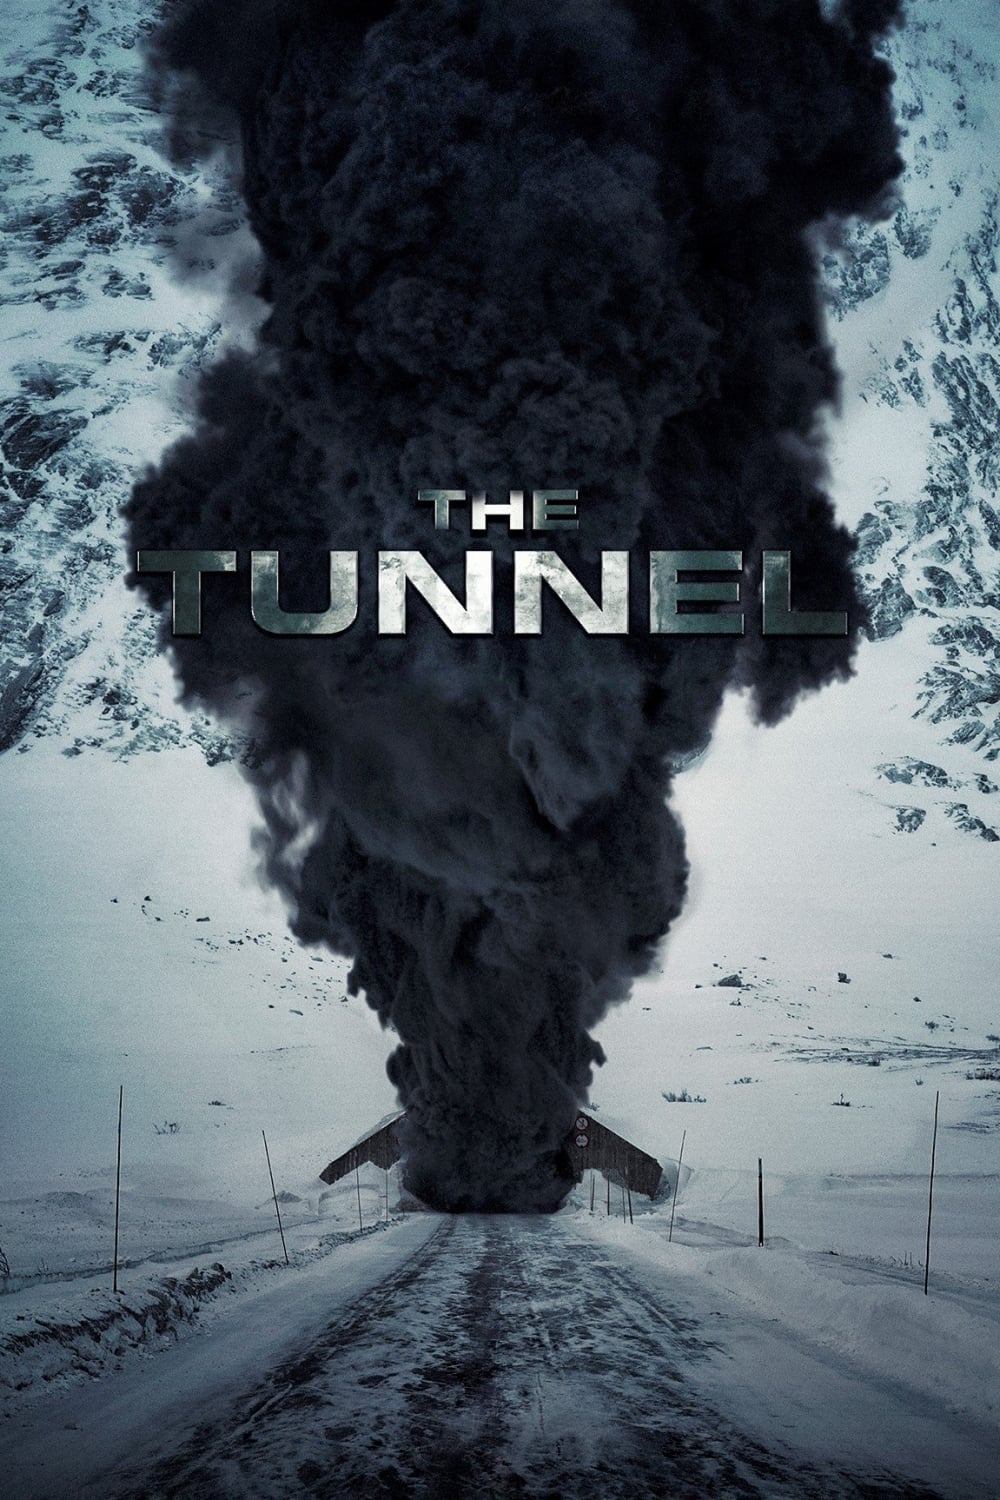 O Túnel